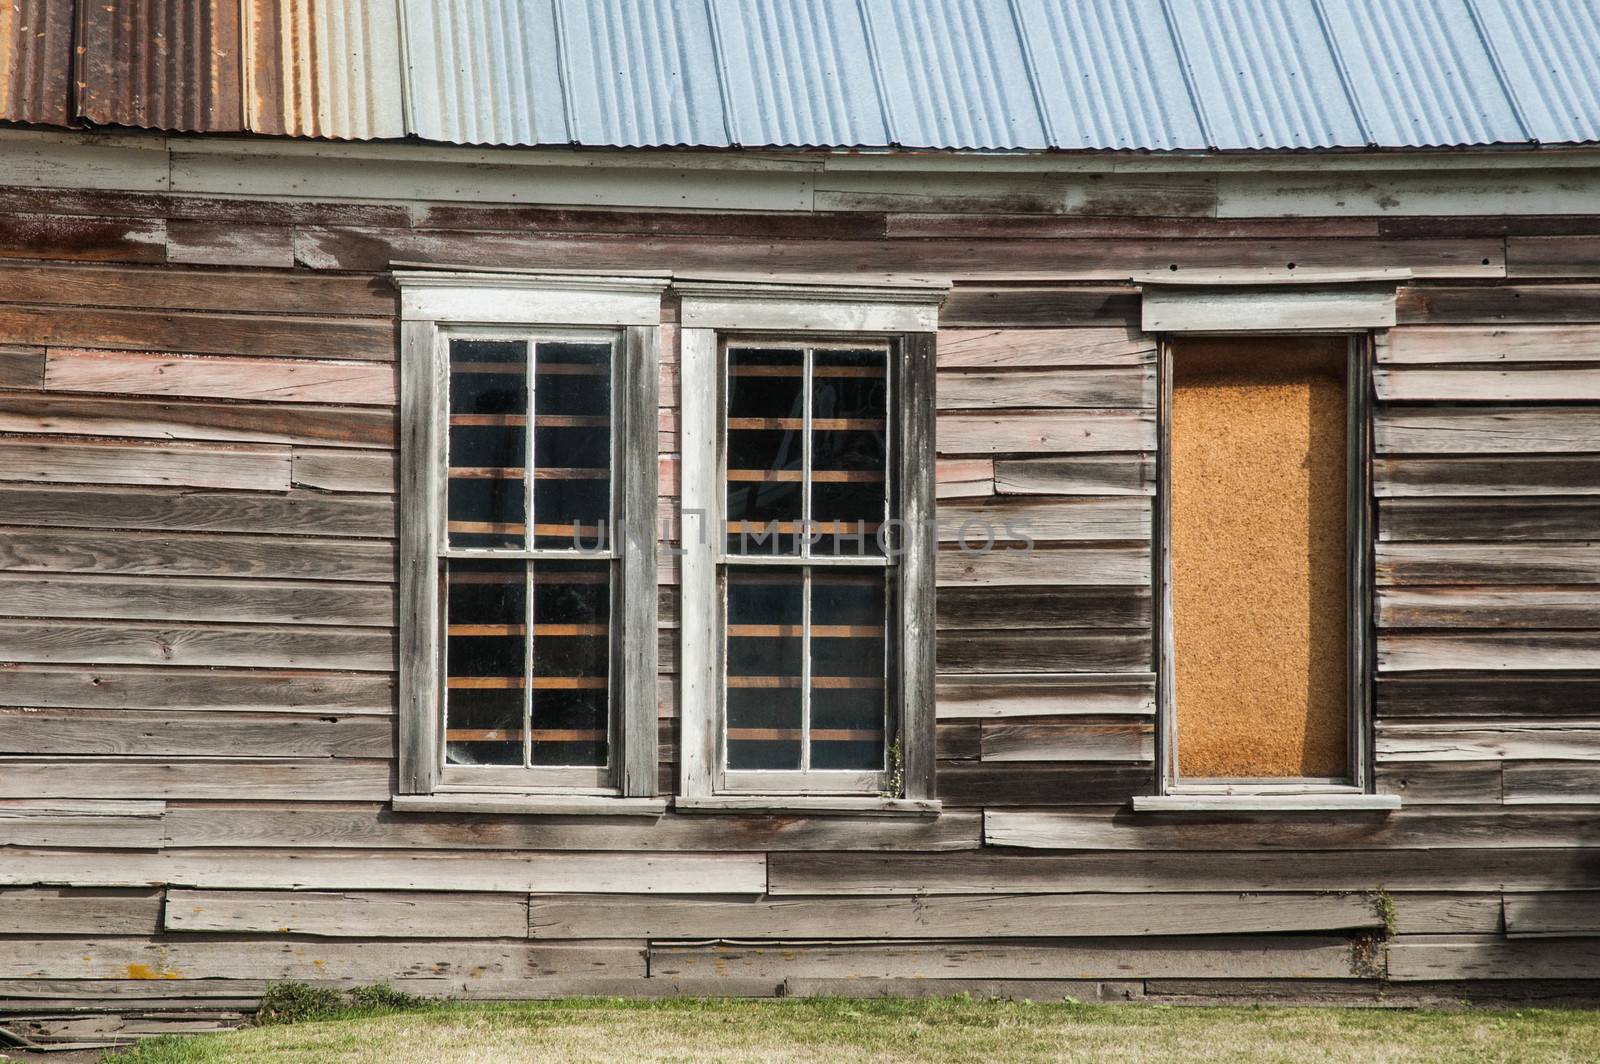 Windows in abandoned barn in the Palouse region of Washington